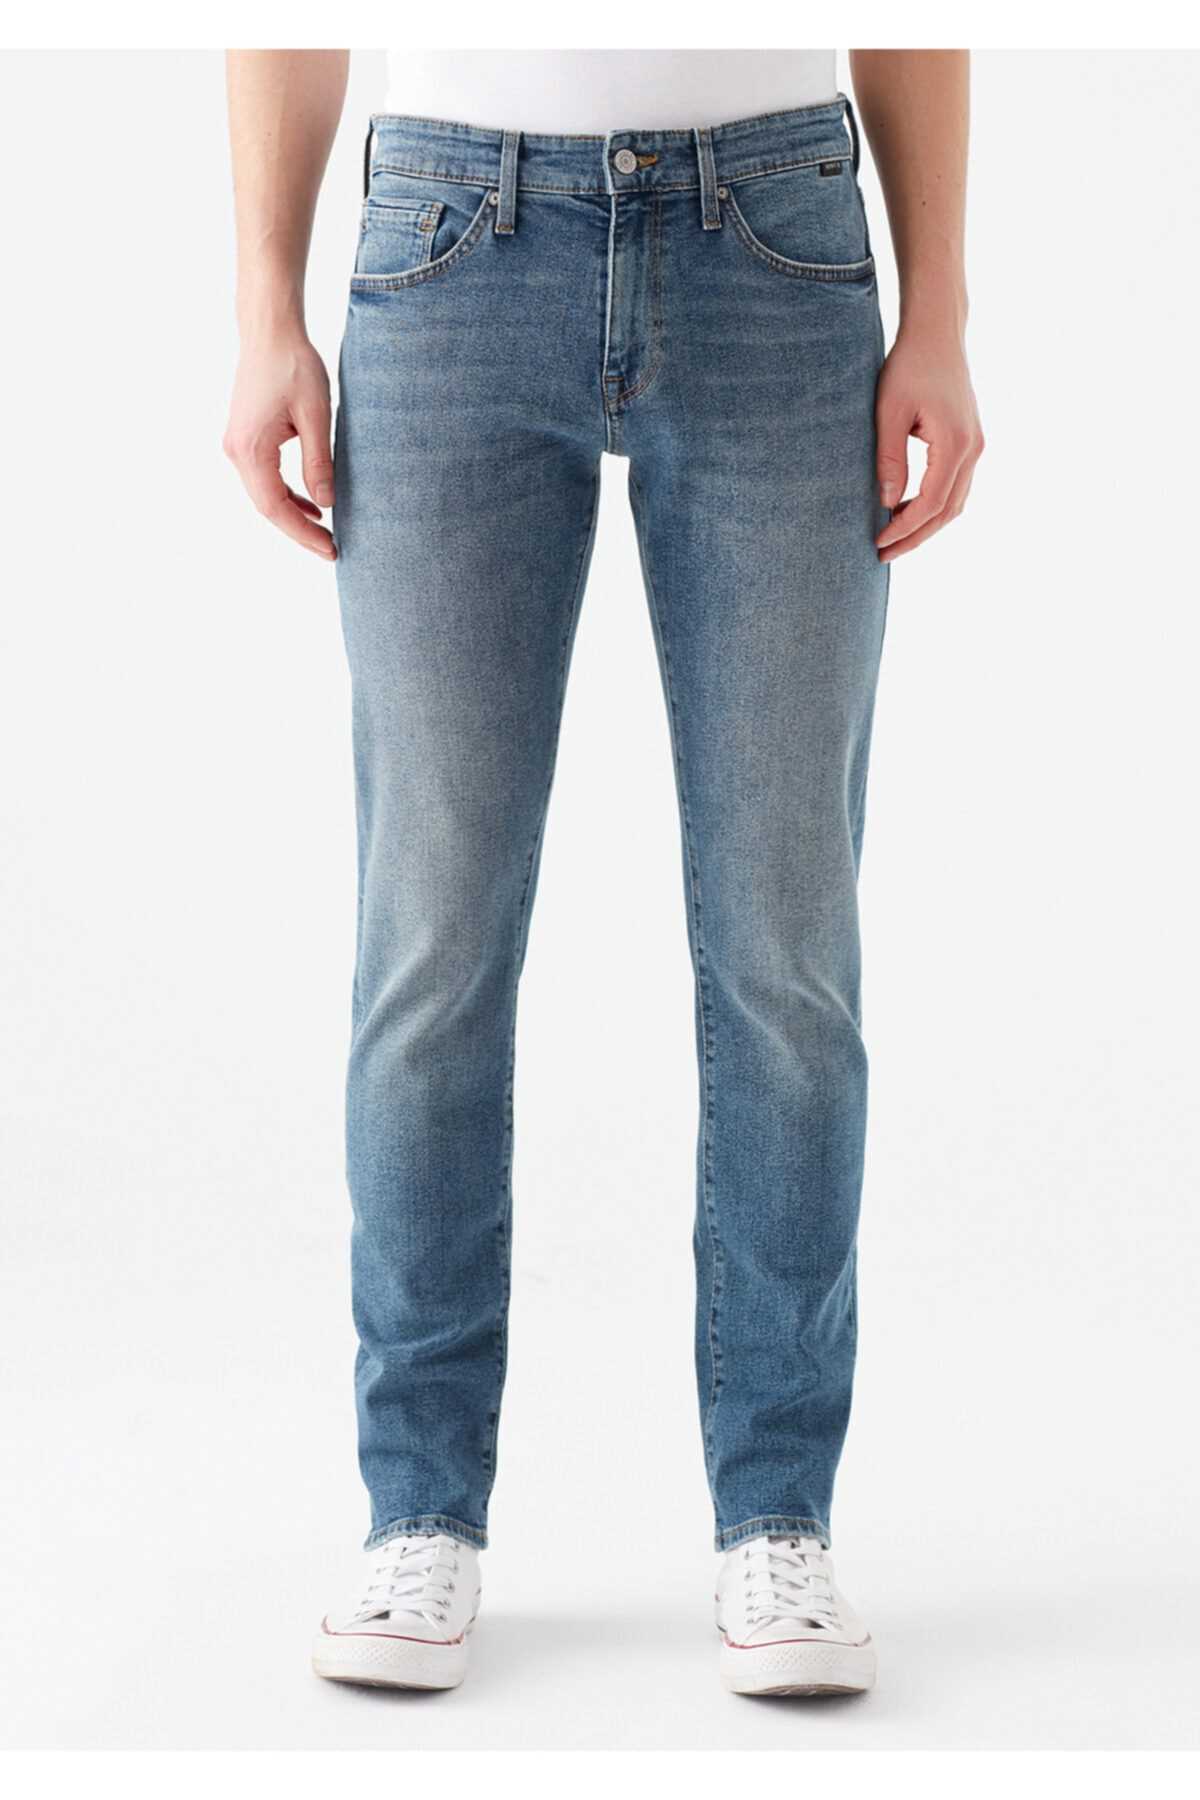 خرید اینترنتی شلوار جین بلند برند ماوی رنگ آبی کد ty47772282